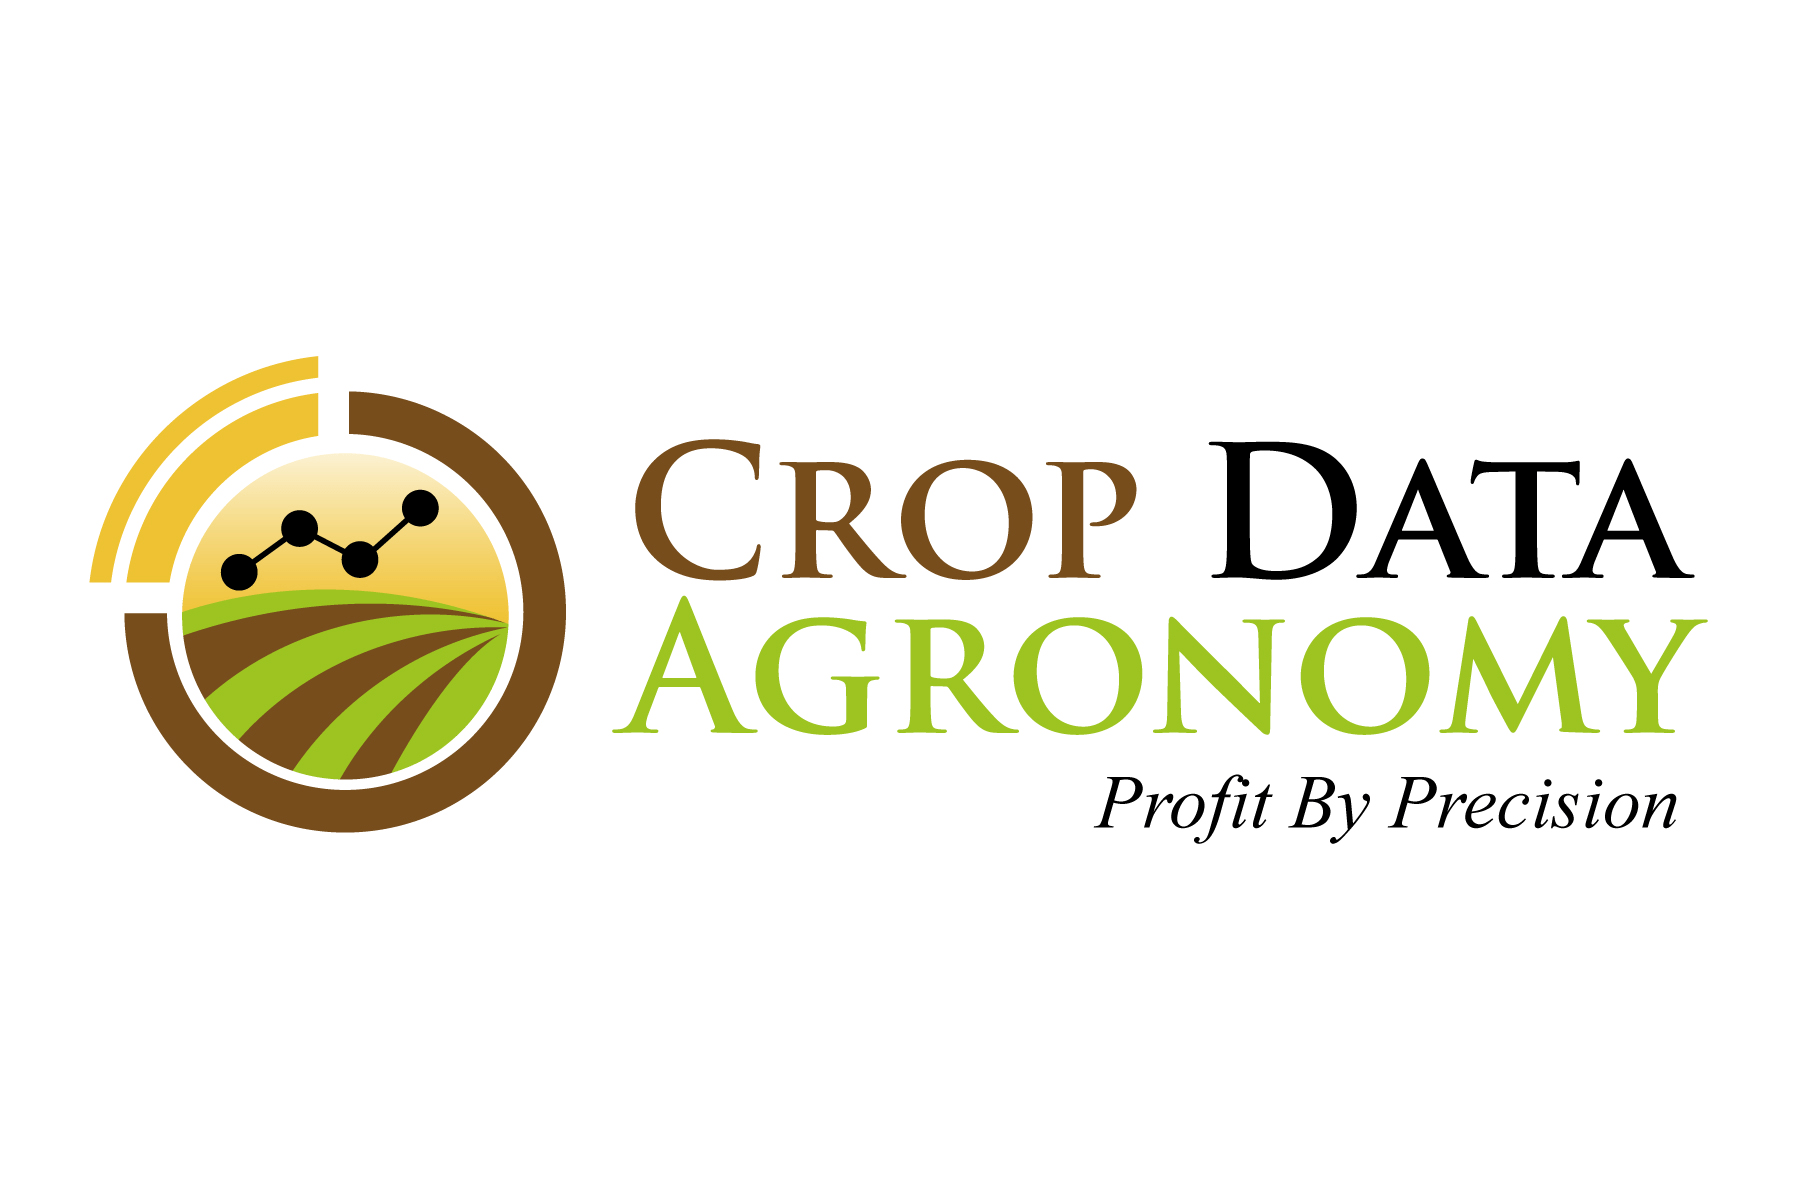 Agronomy Logo - Logo Design Contests Unique Logo Design Wanted for Crop Data